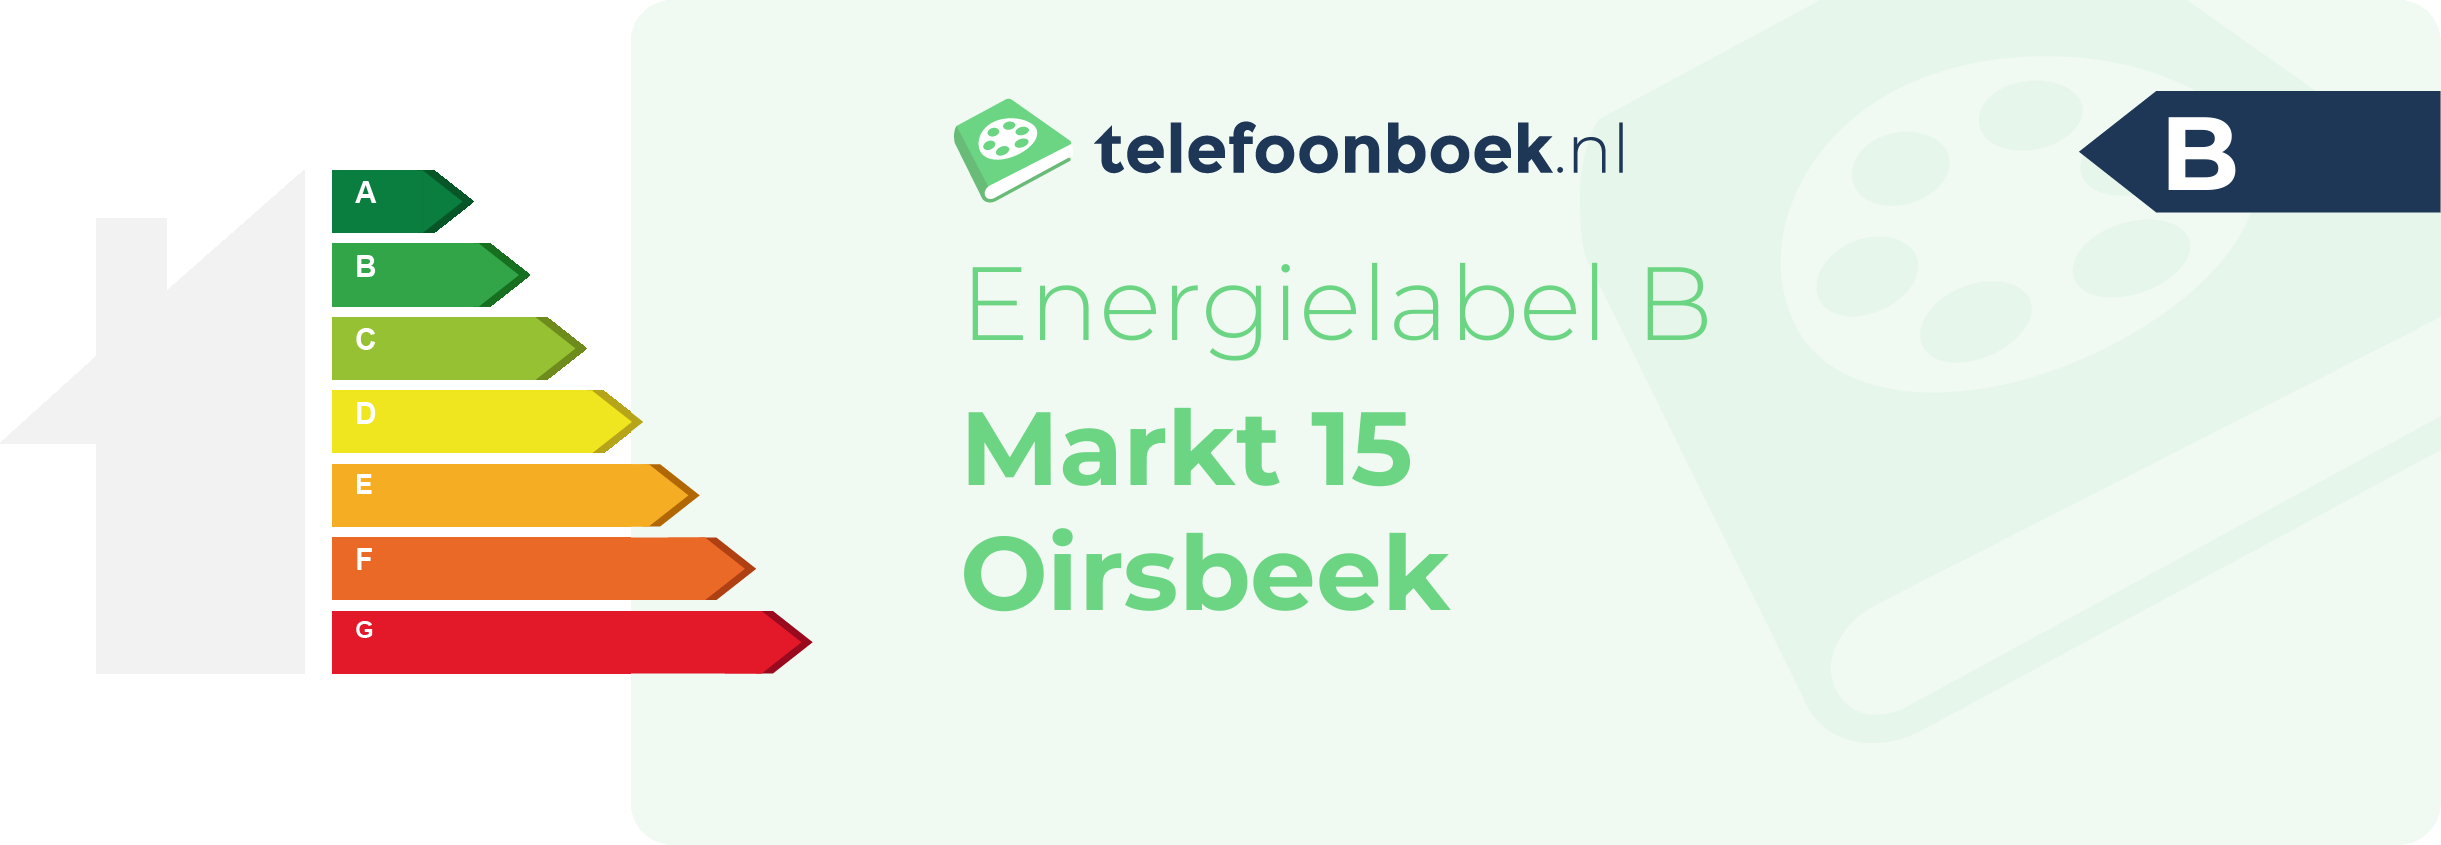 Energielabel Markt 15 Oirsbeek